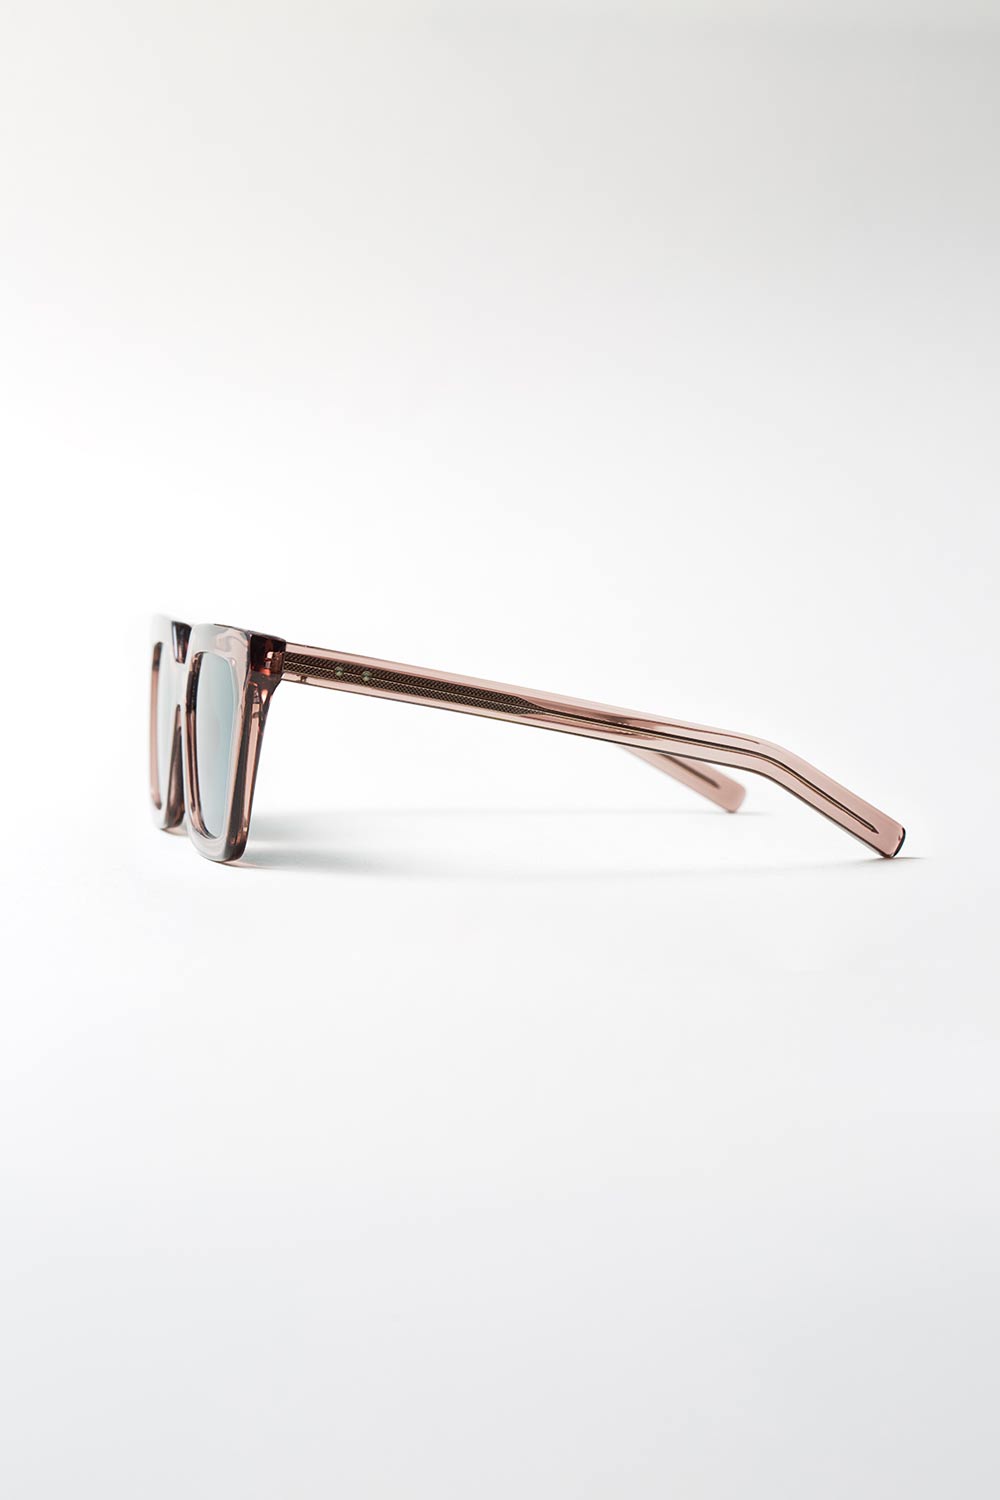 Oscar Magnuson - Sunglasses Gaff OM5 Light Taupe